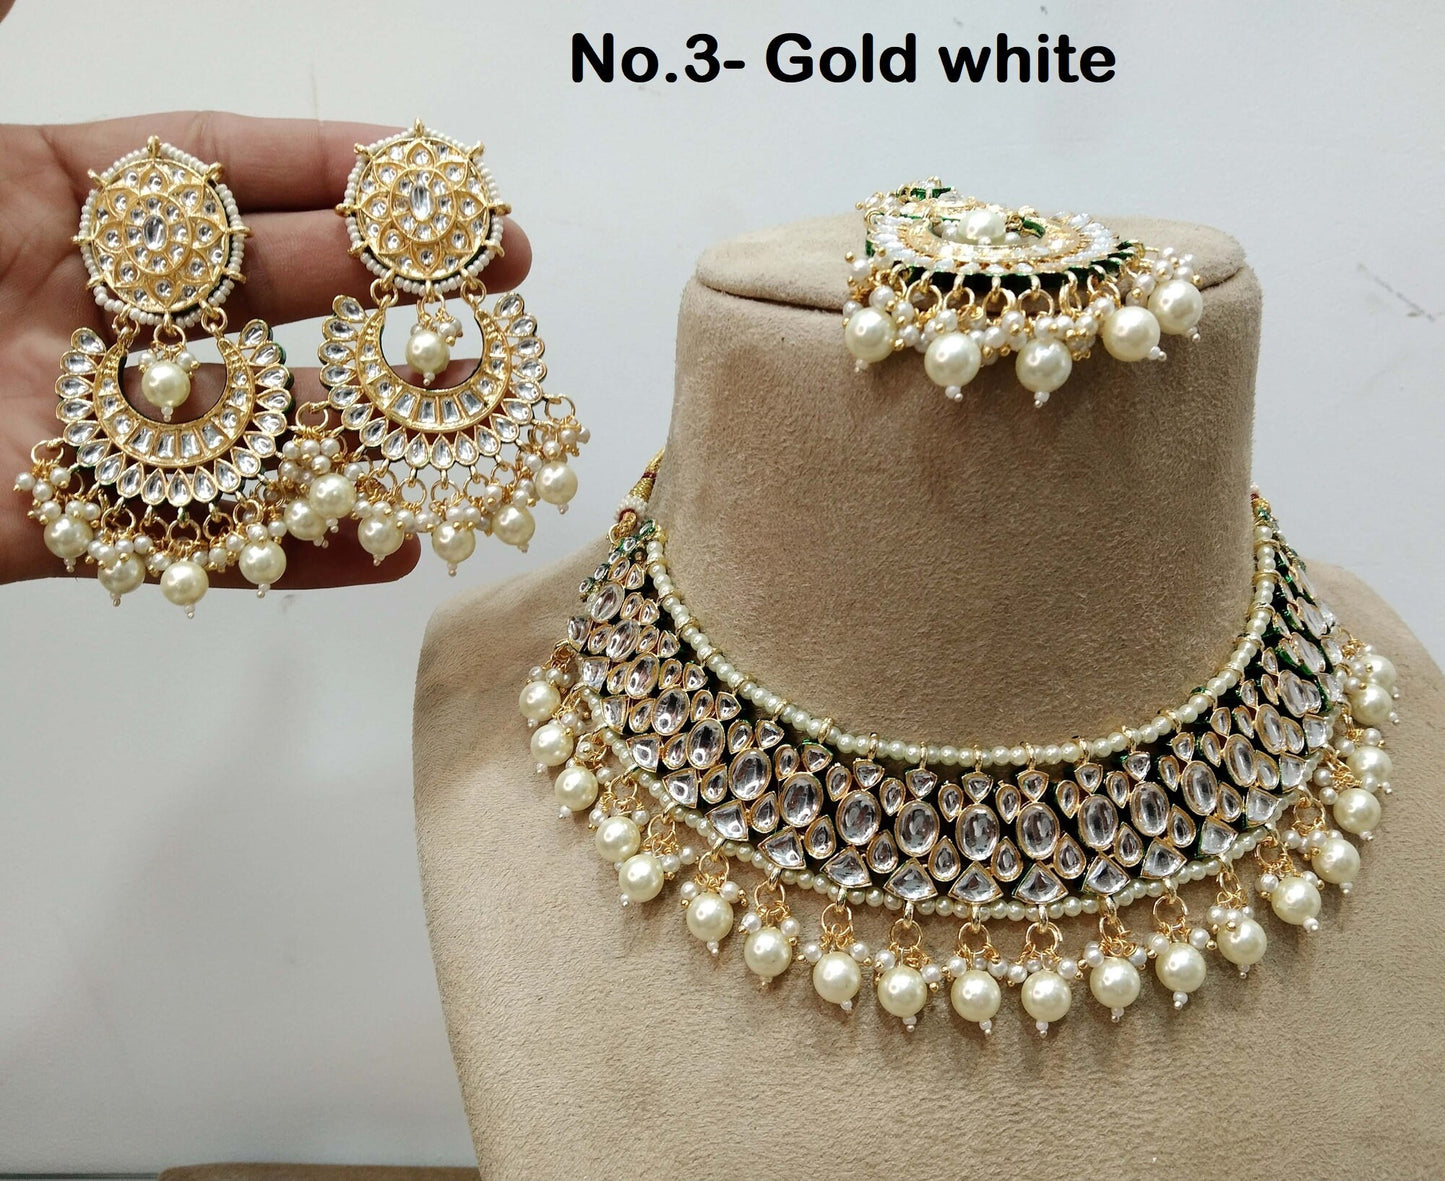 Indian Jewellery/ Gold Bridal Kundan necklace Set Indian Majenta, Gold white, Rama green Bridal Jewellery carl kundan Necklace set